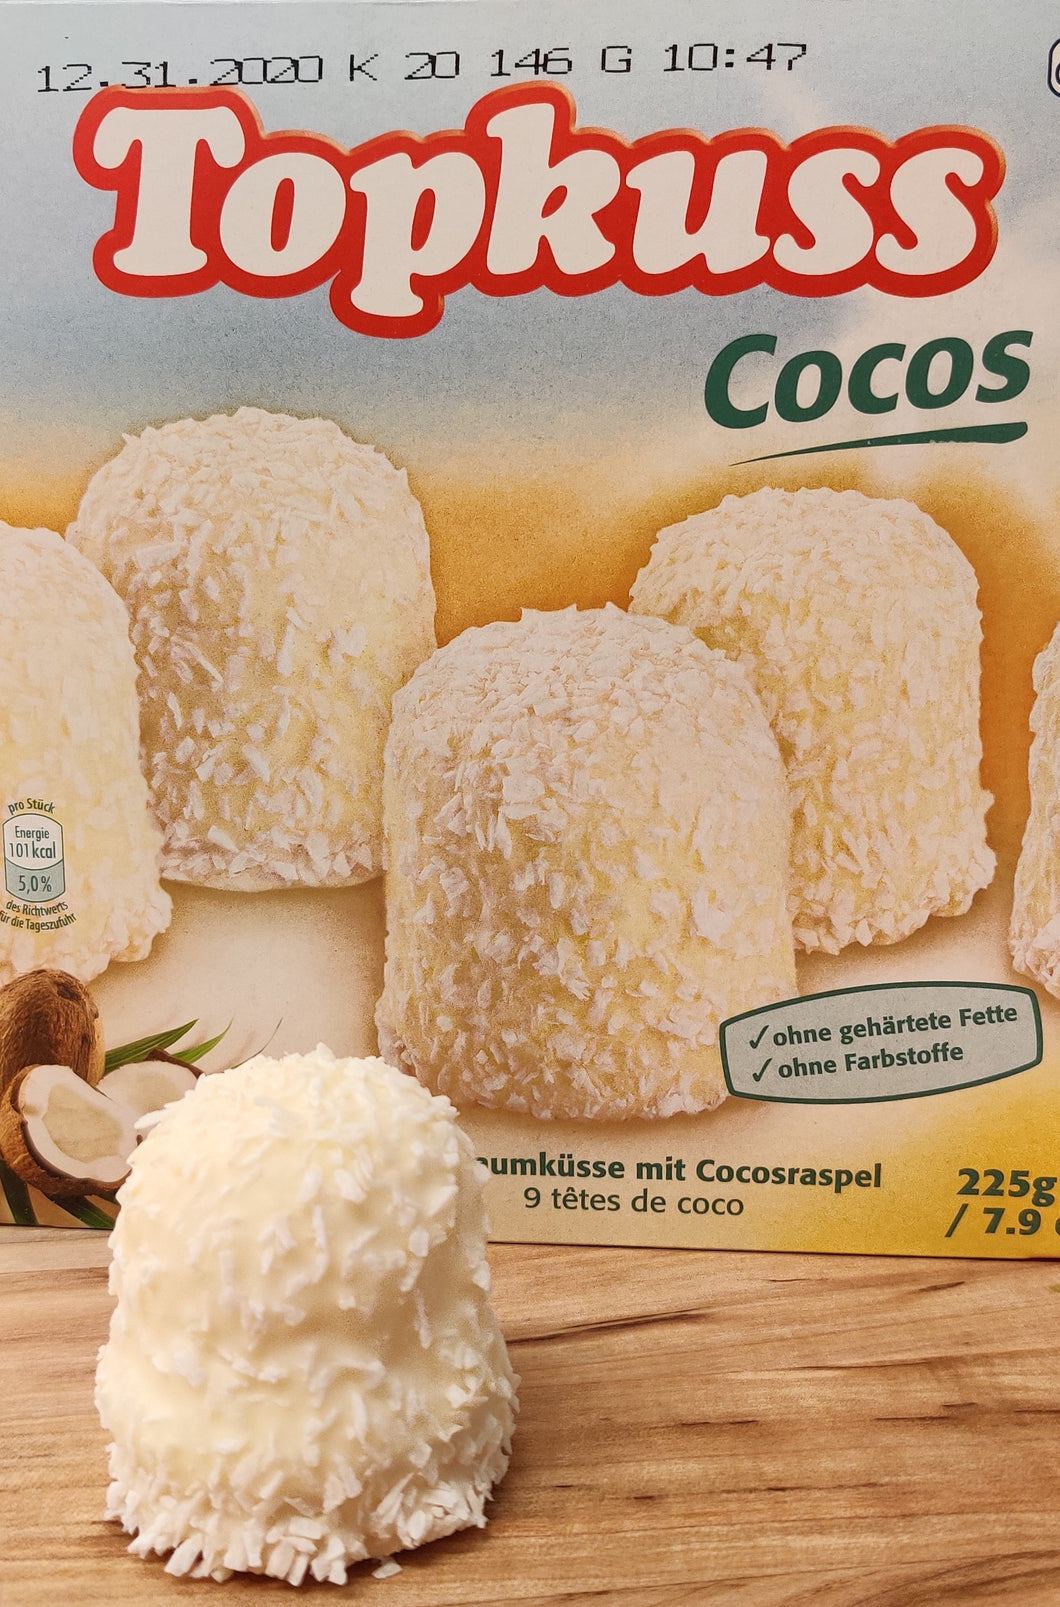 Schokokuss (cocos)